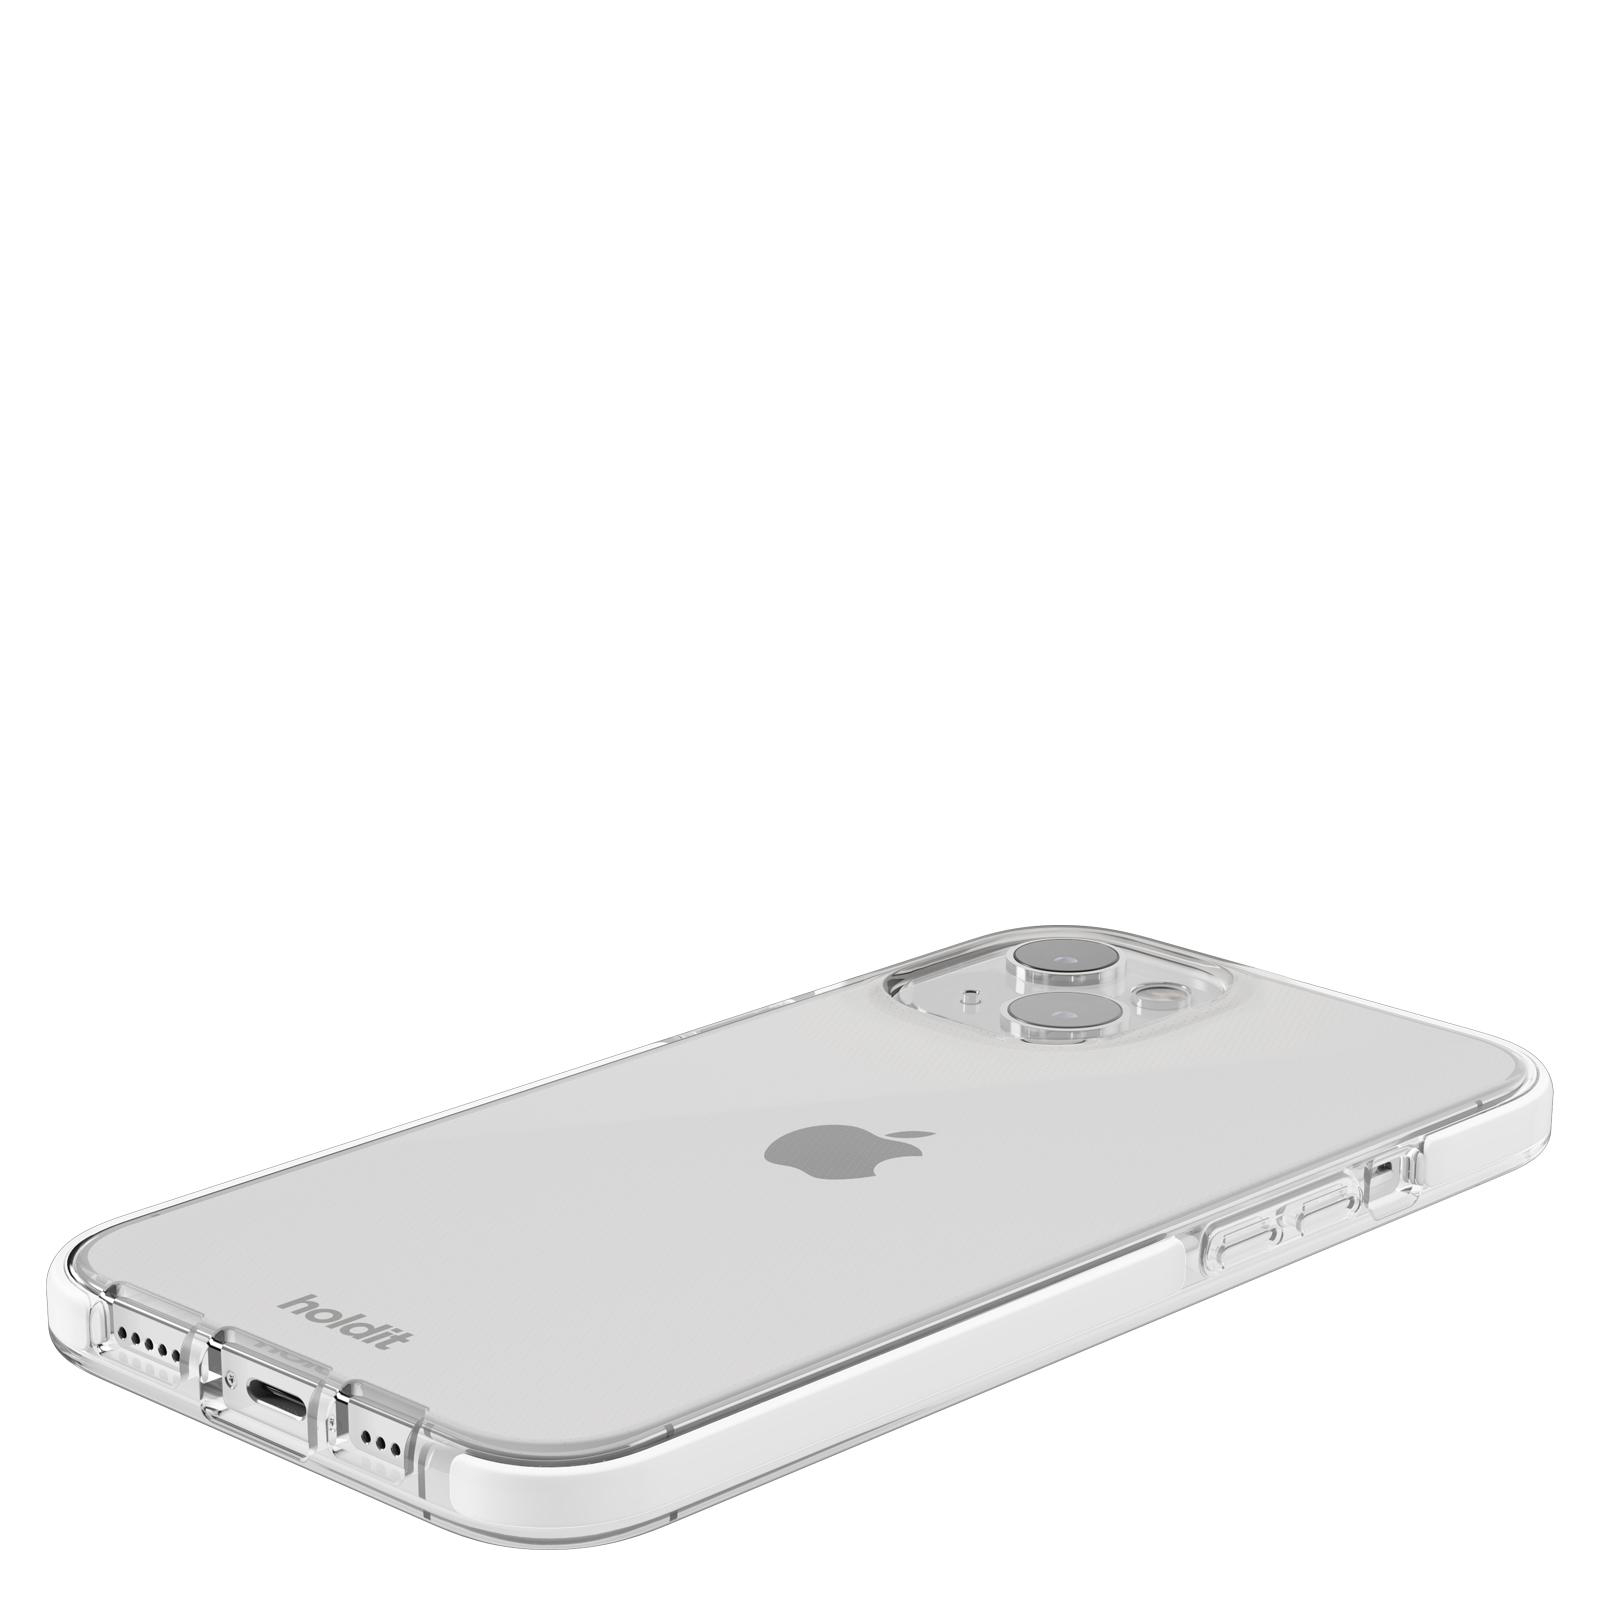 Backcover, 14 Apple, HOLDIT White Seethru Plus, iPhone Case,